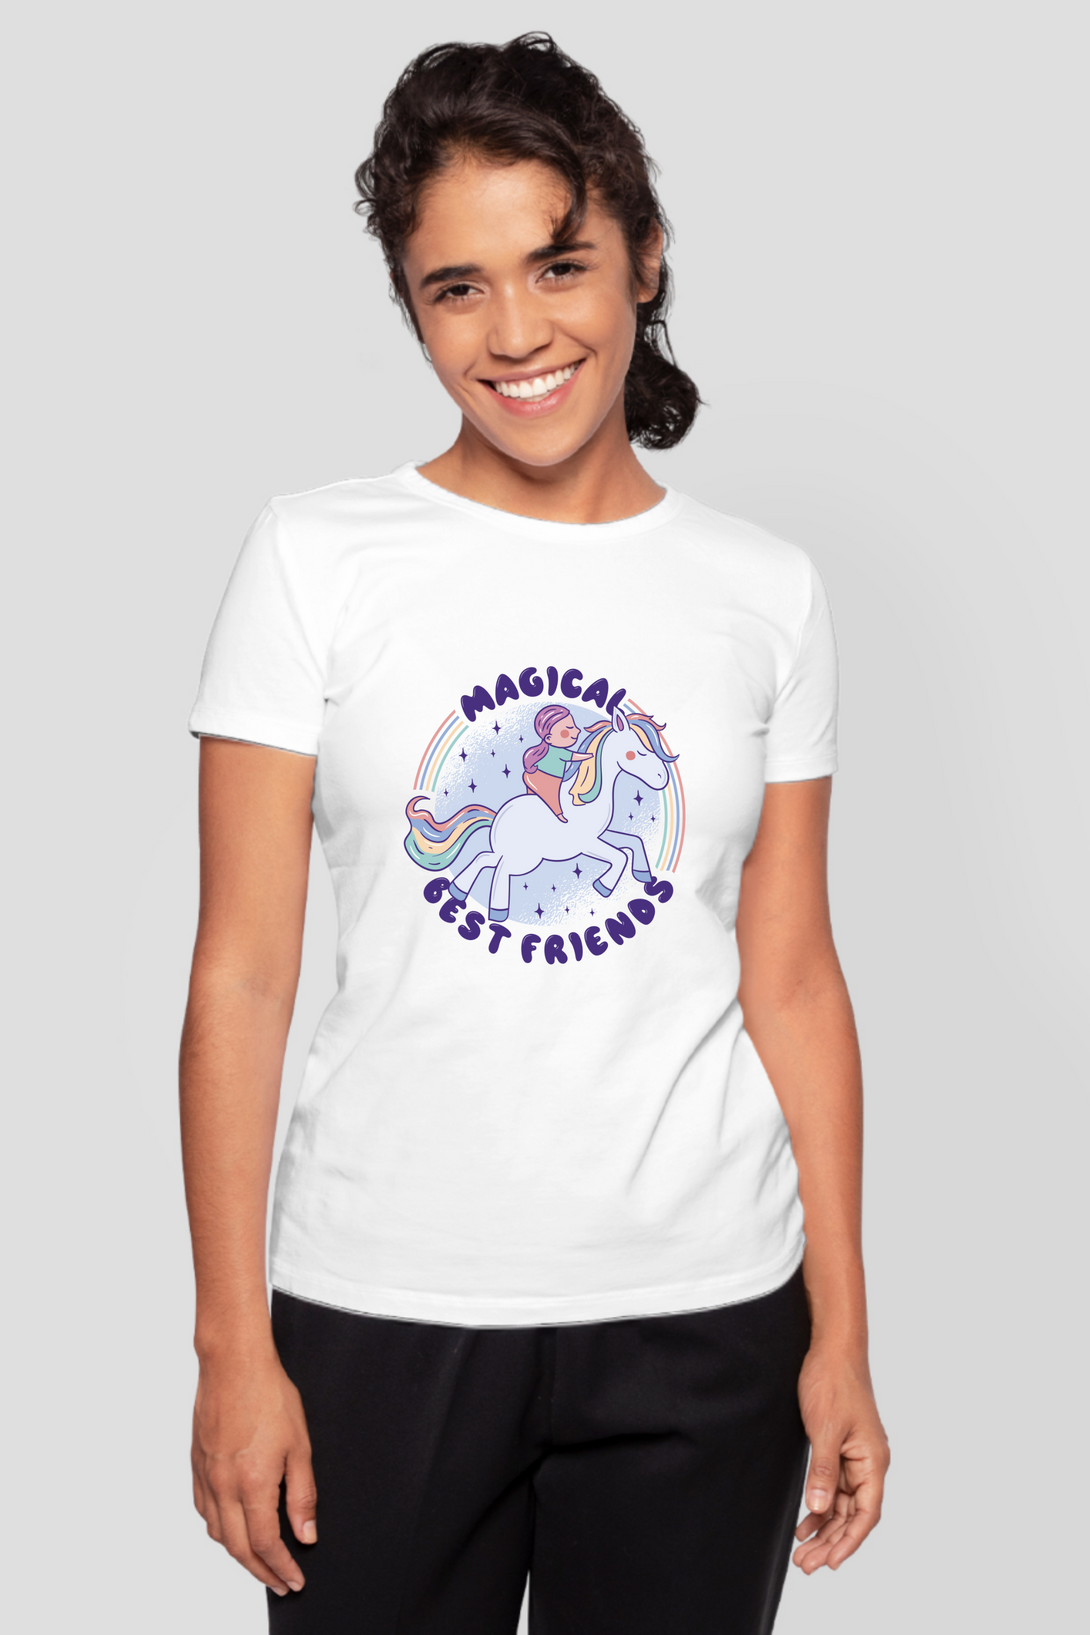 Magical Friend Printed T-Shirt For Women - WowWaves - 7